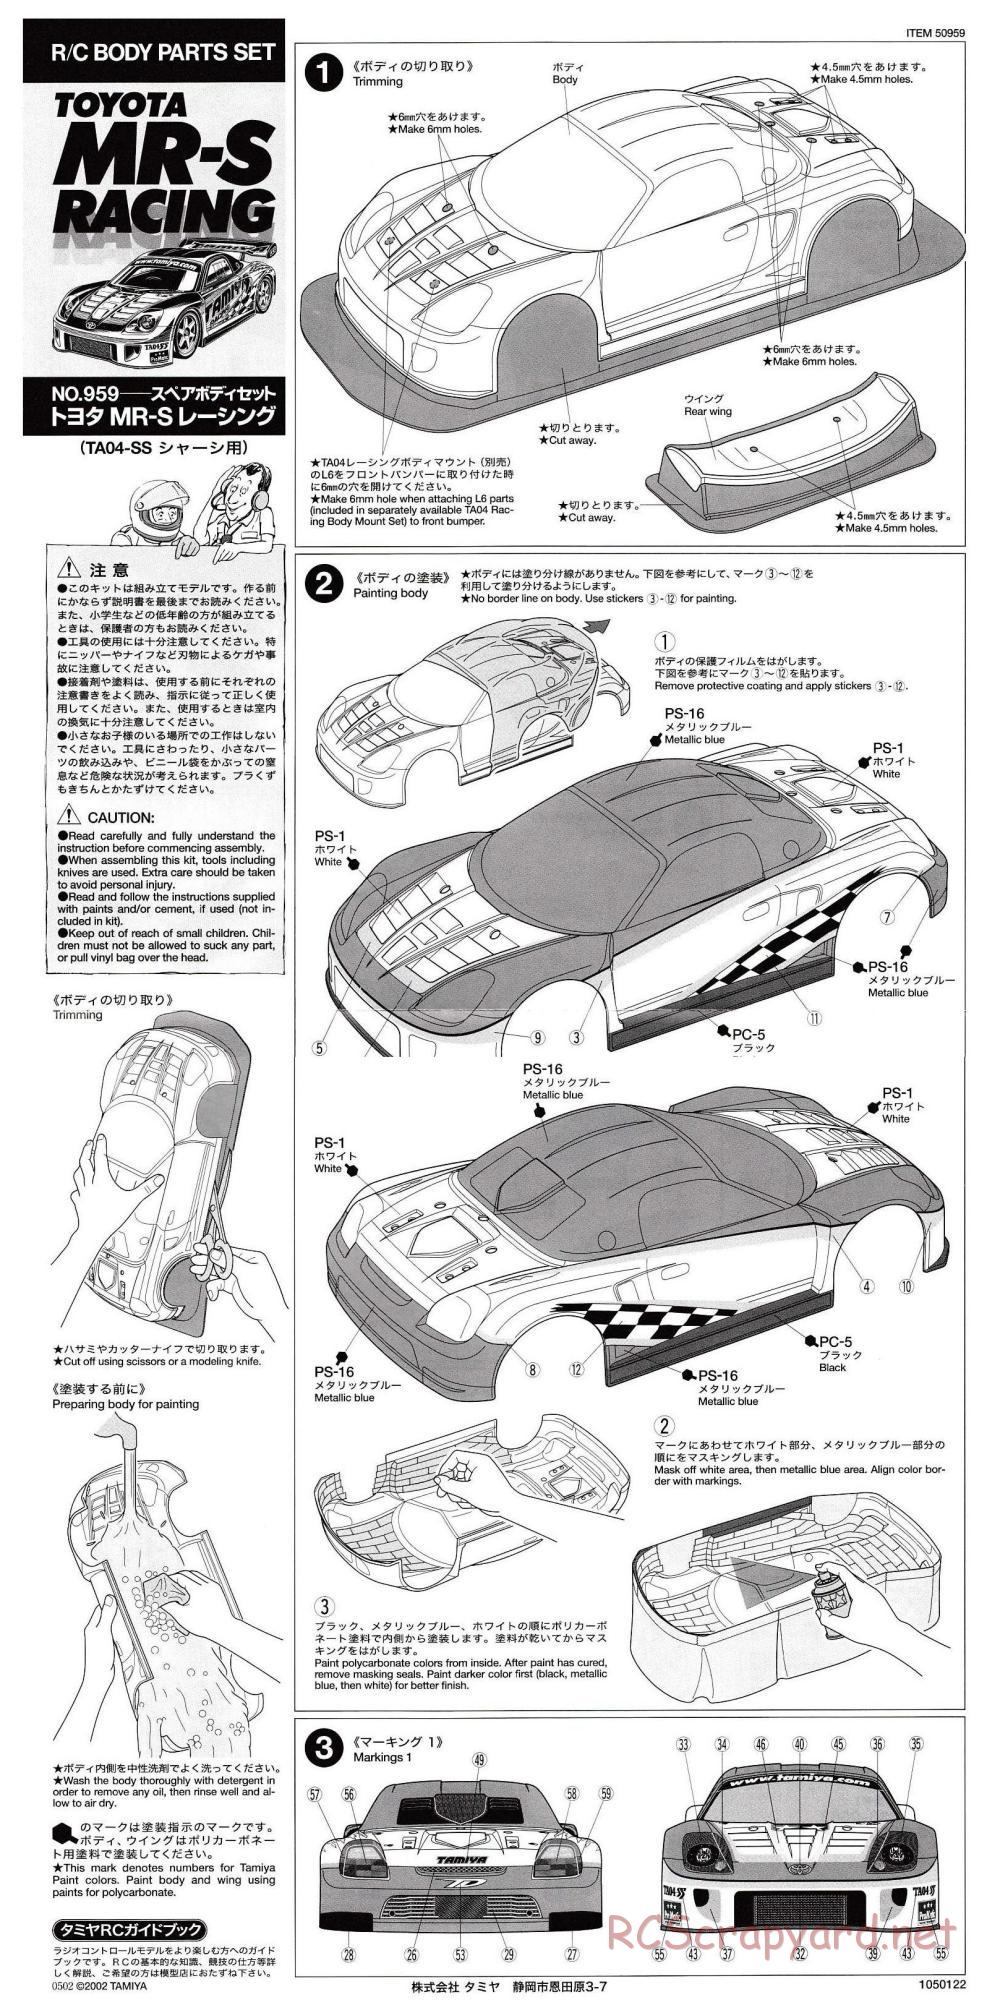 Tamiya - Toyota MR-S Racing - TA04-SS Chassis - Body Manual - Page 1